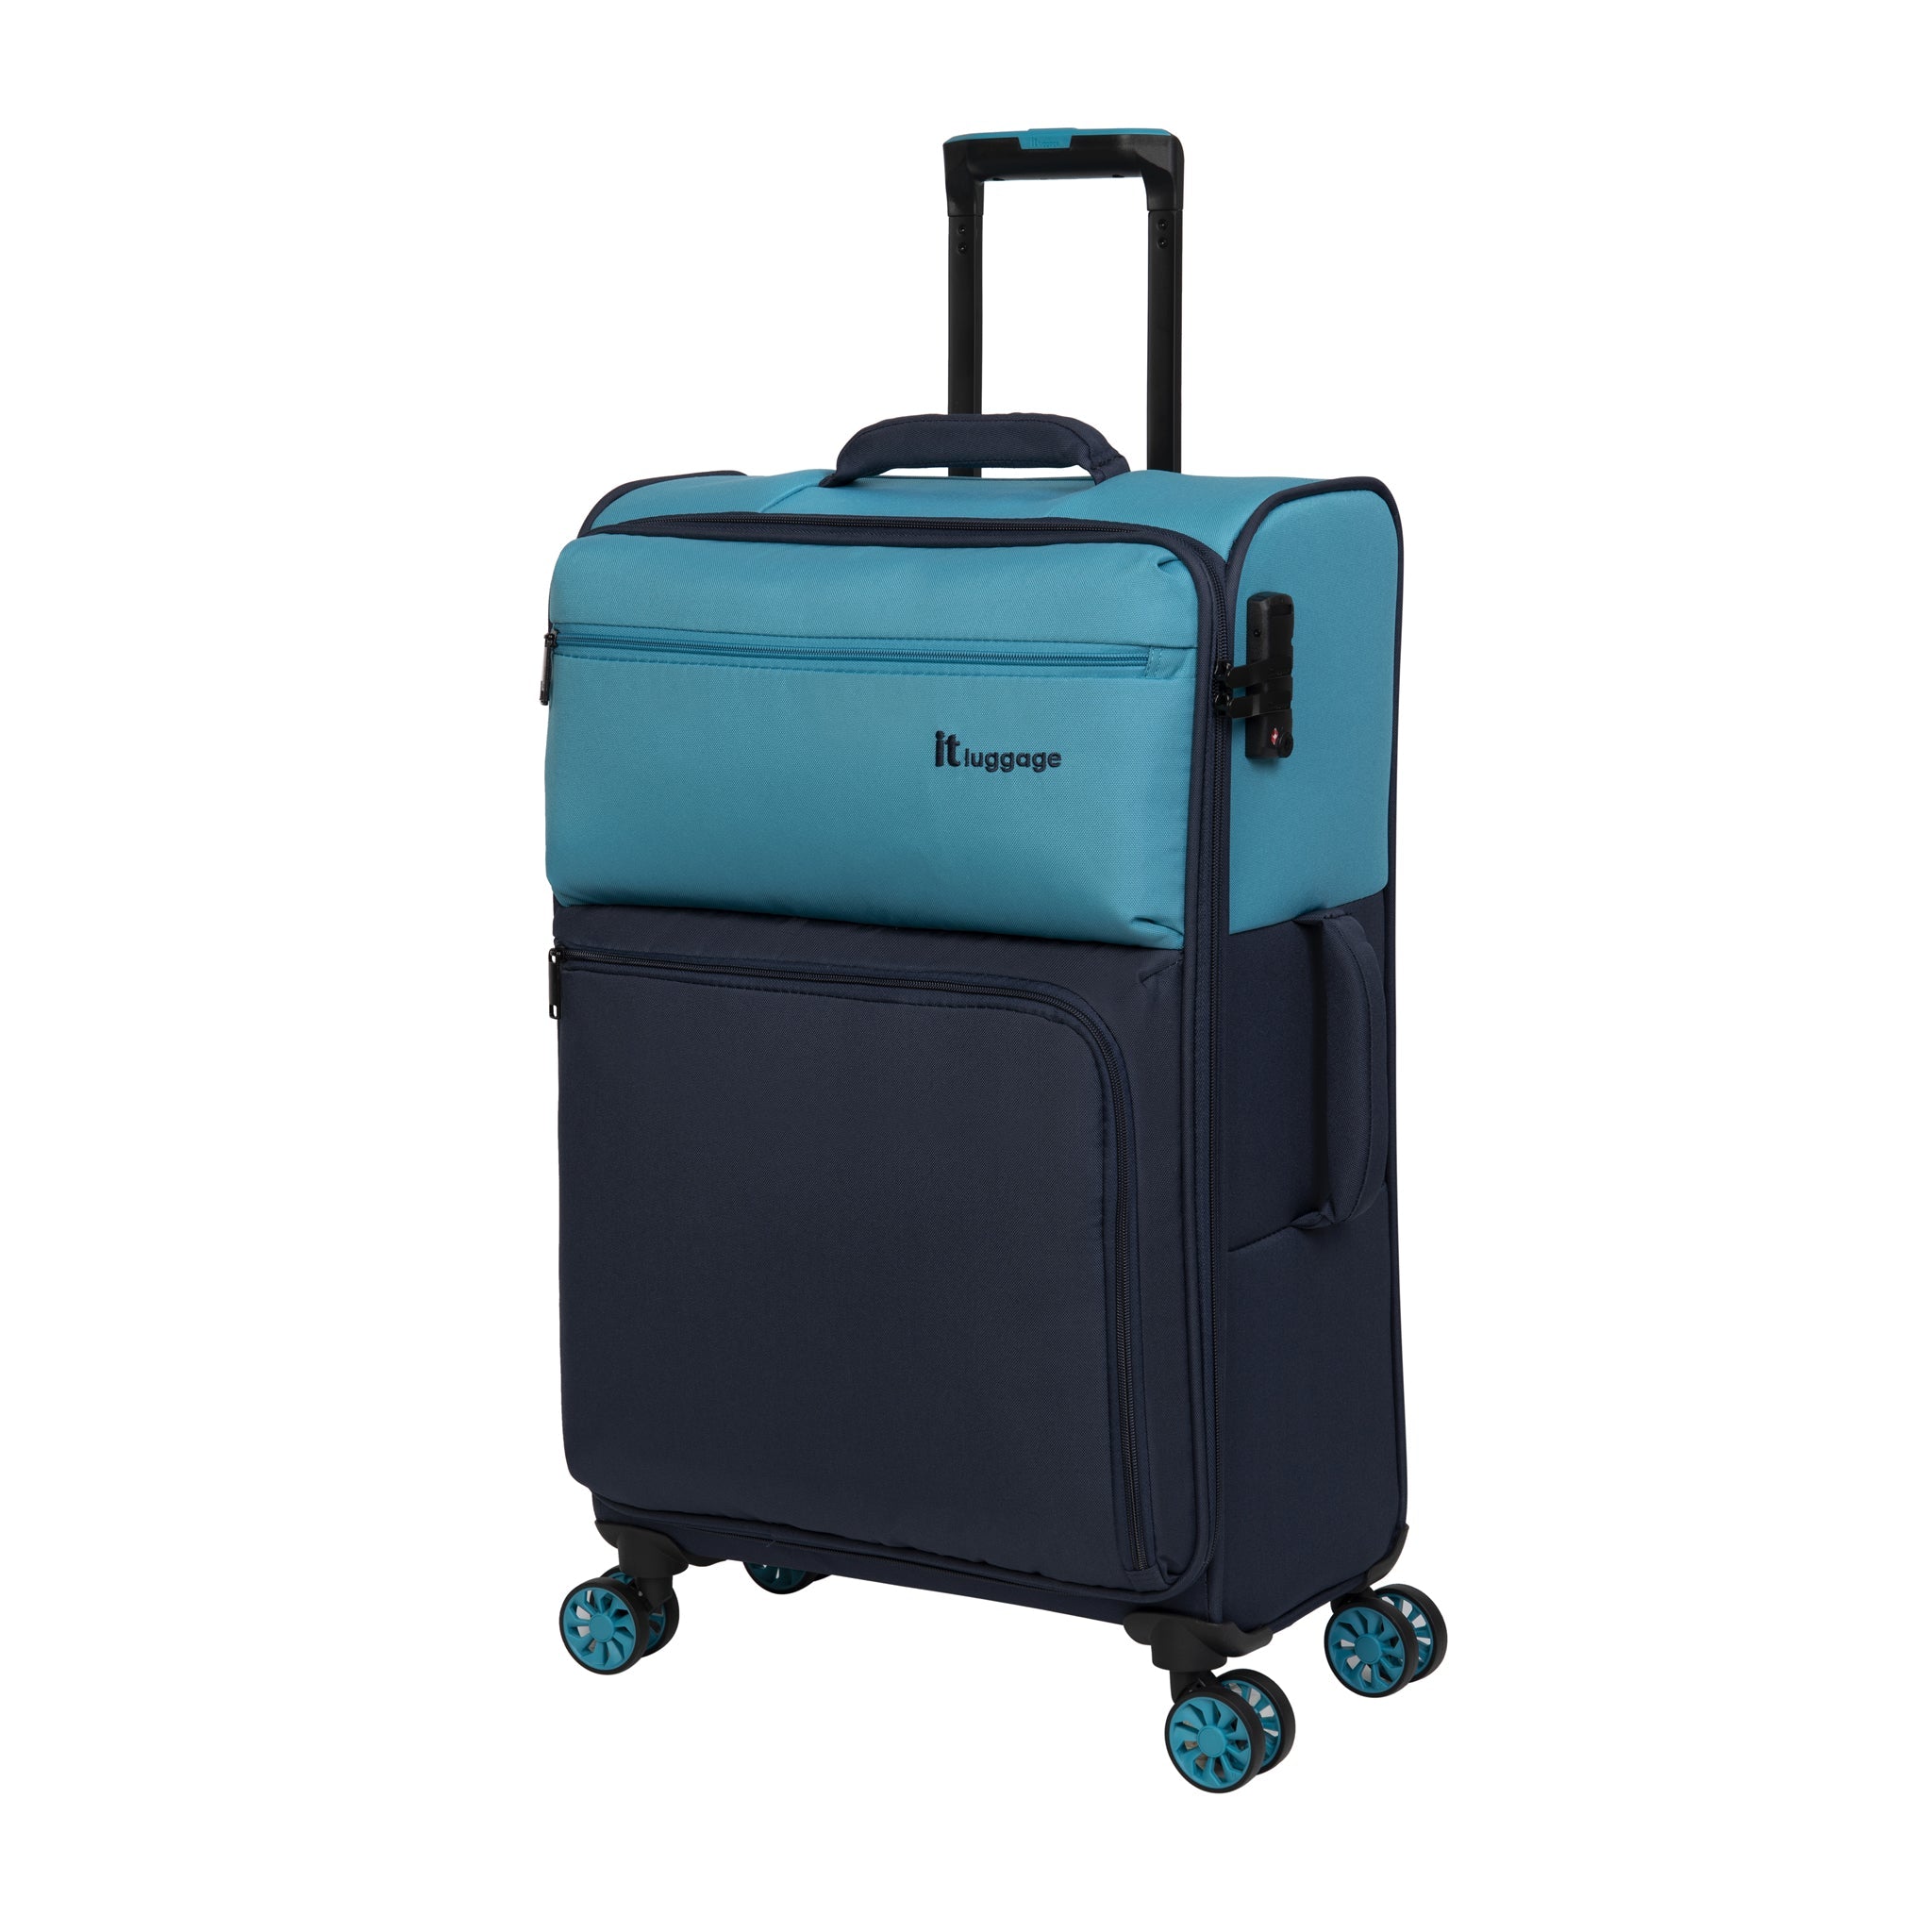 Medium Suitcase Trolleys - it Luggage